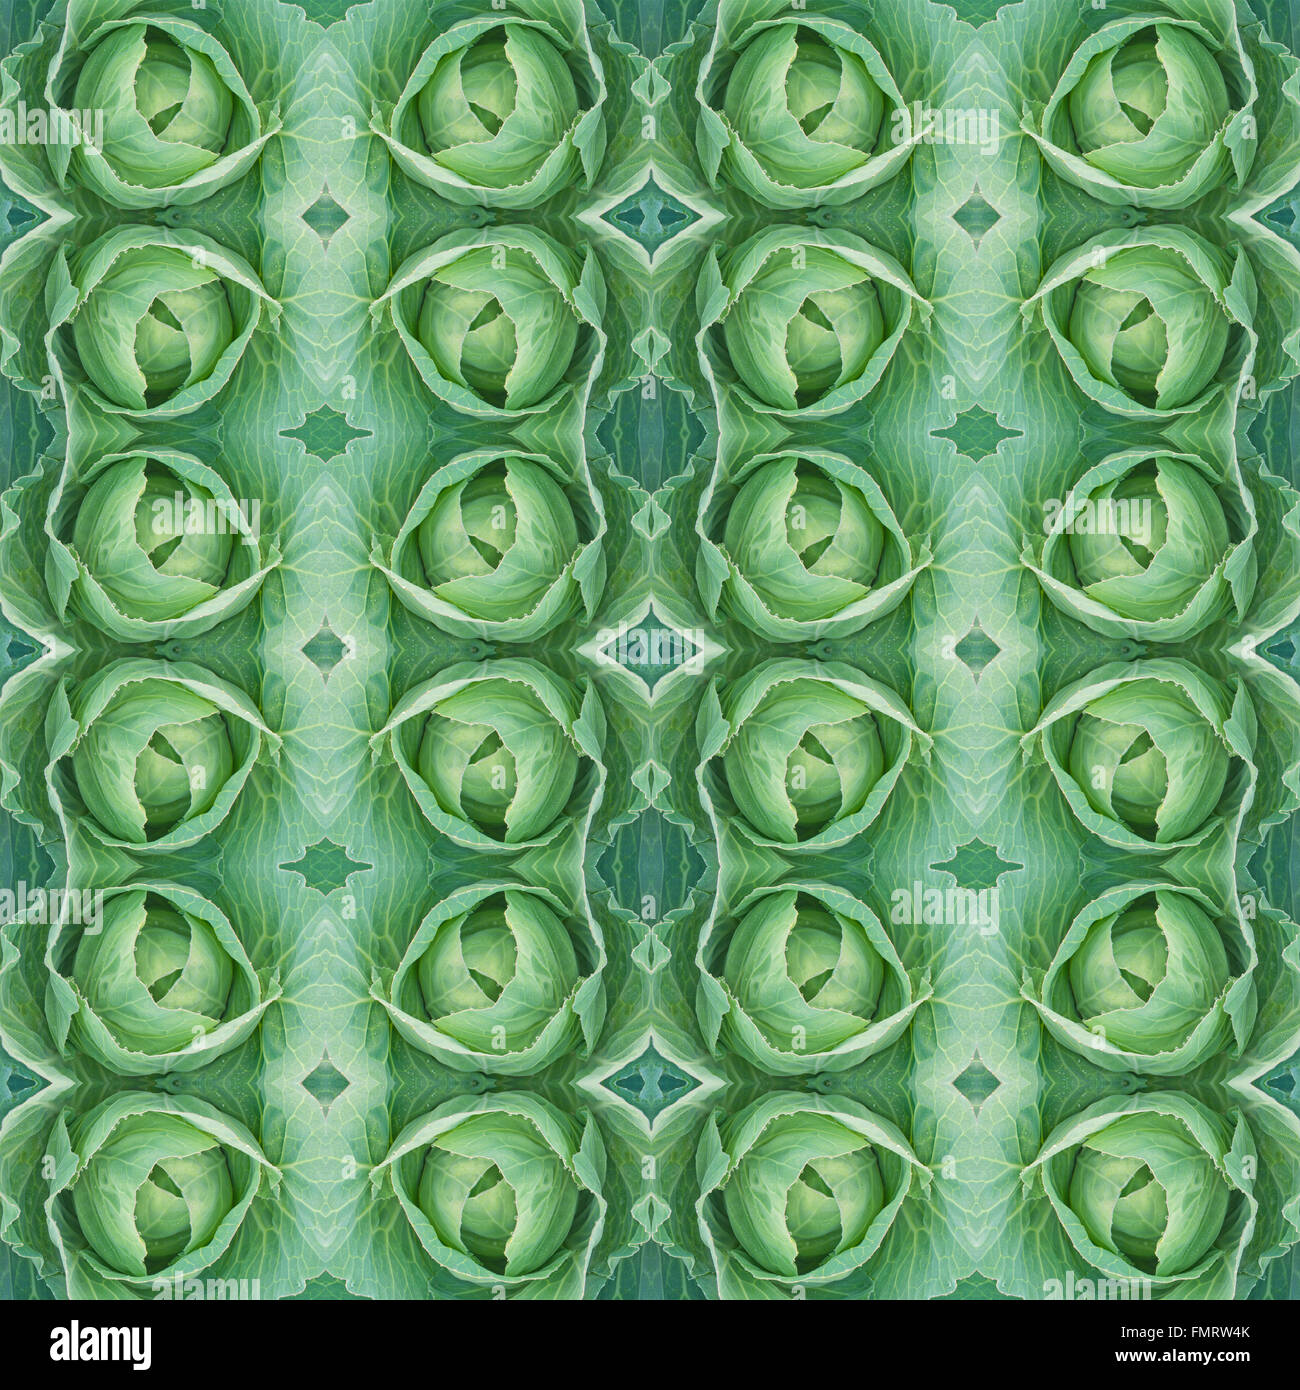 Grünkohl Musterdesign Hintergrund Stockfoto